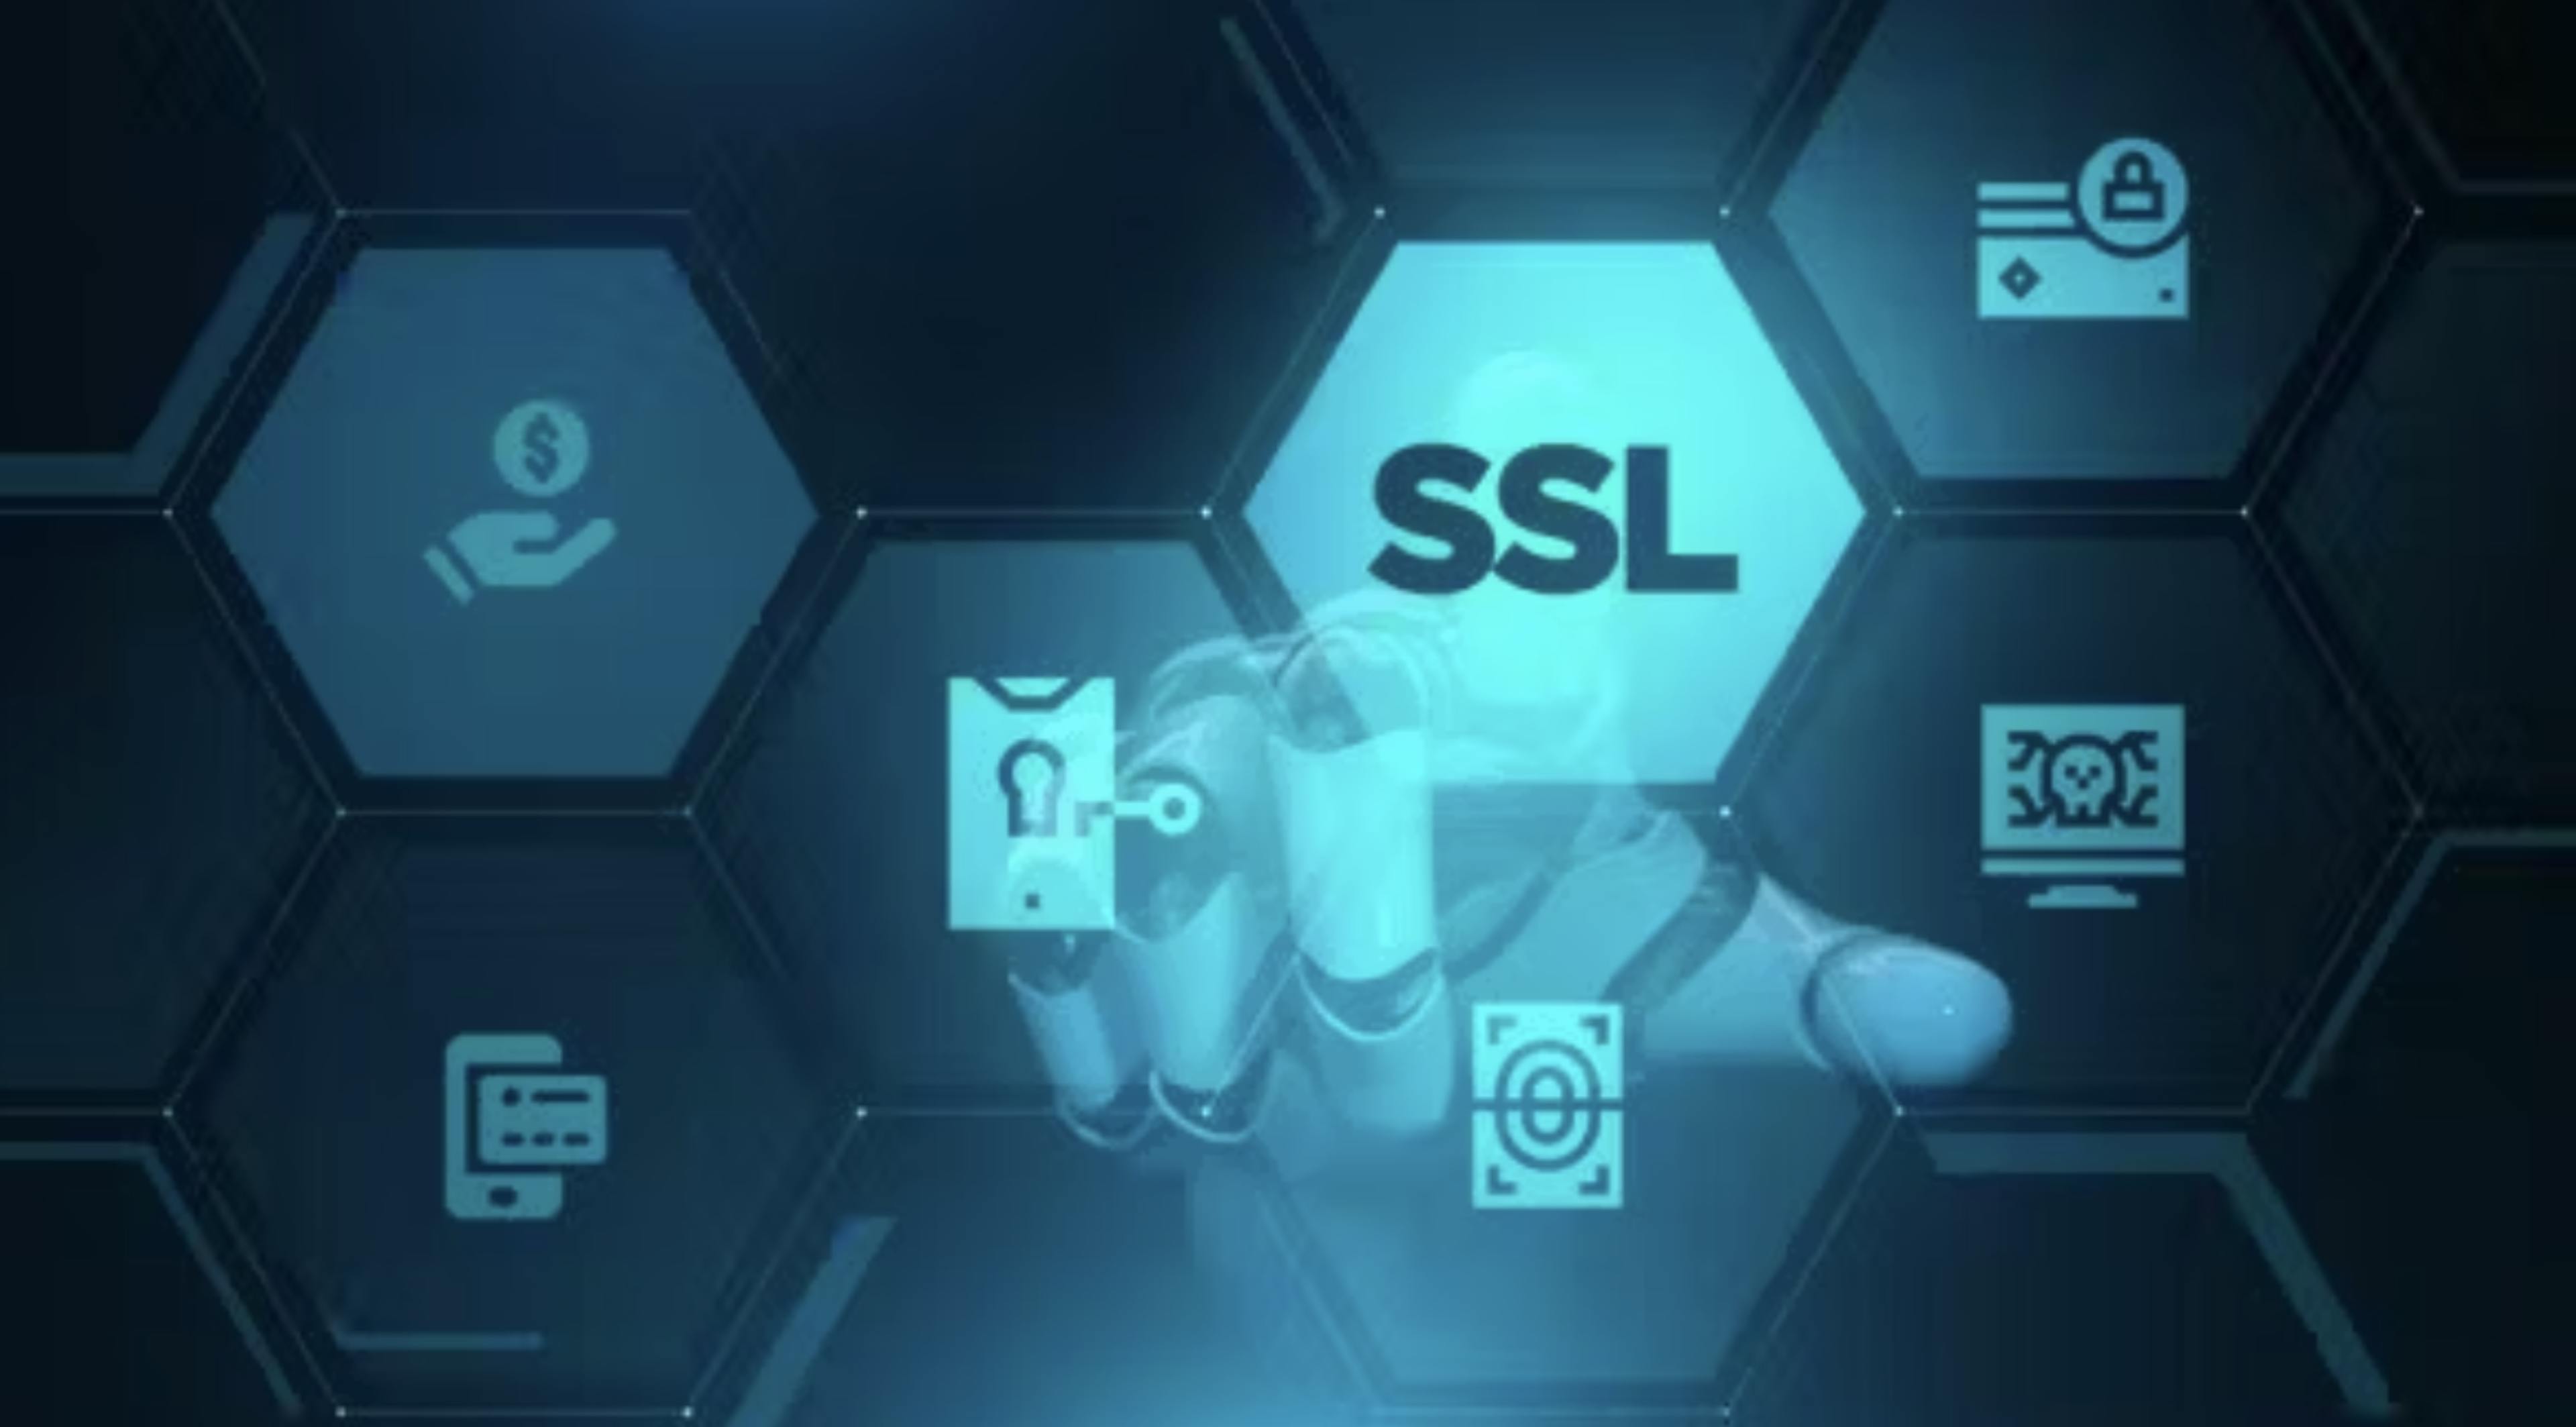 SSL digital image